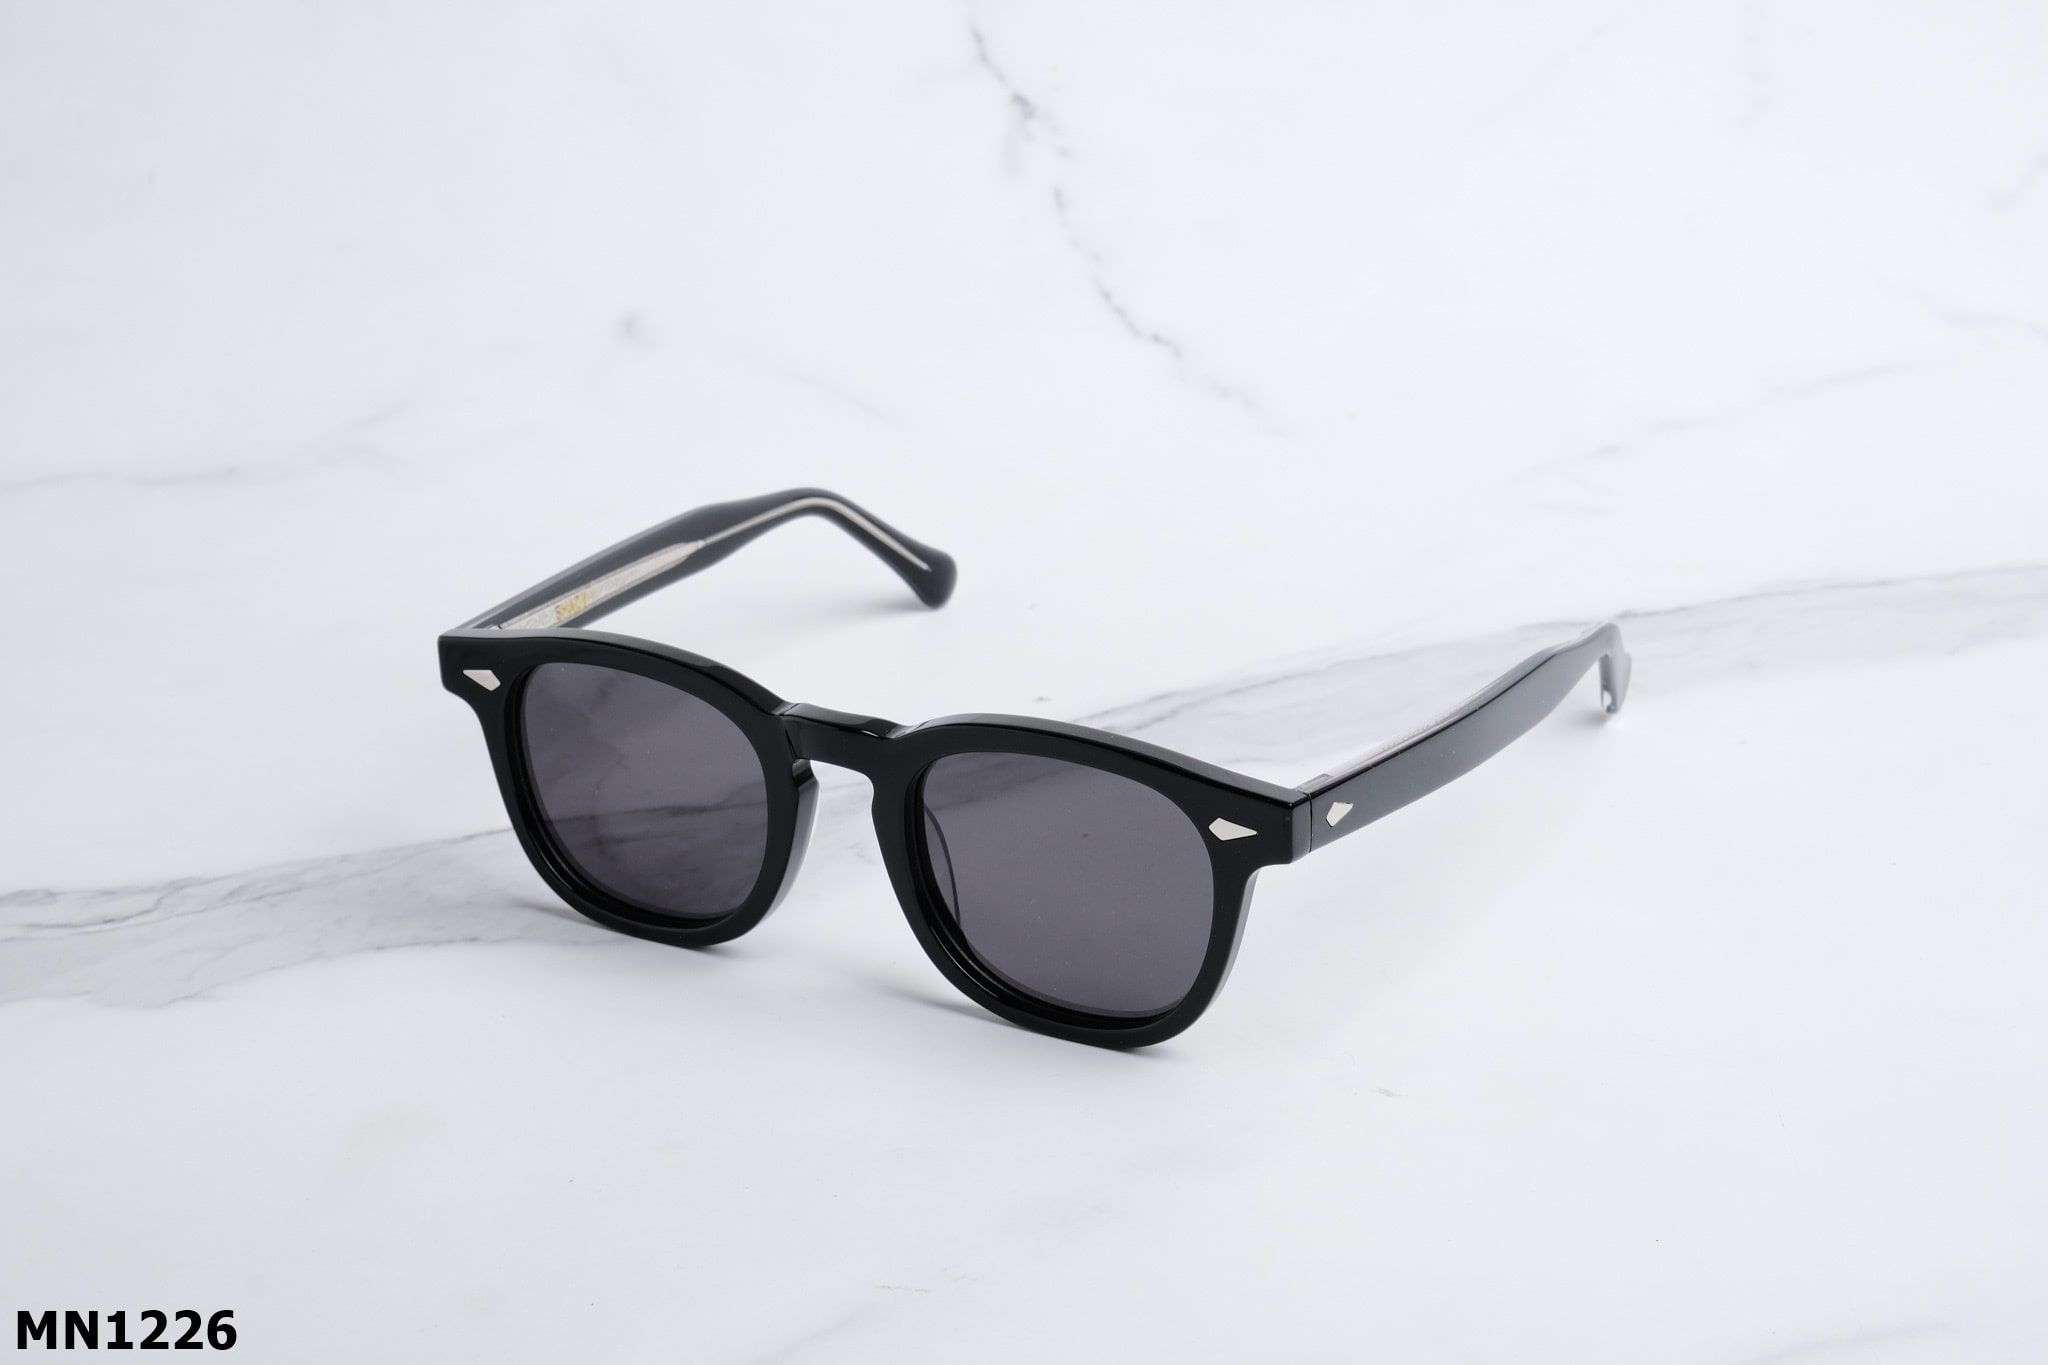  SHADY Eyewear - Sunglasses - MN1226 